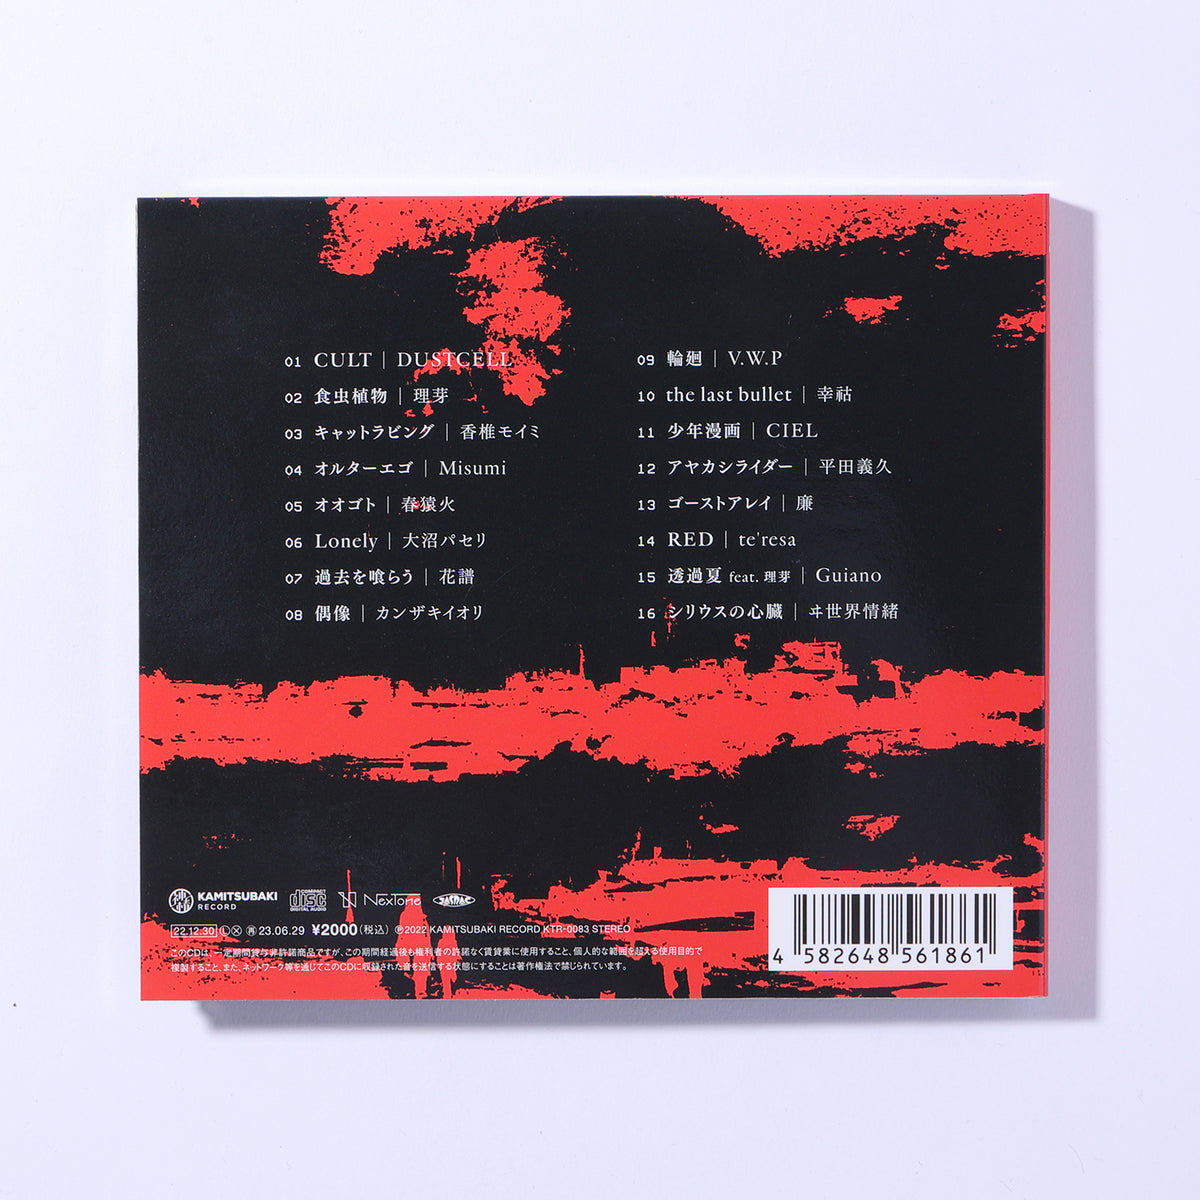 【KAMITSUBAKI STUDIO】Various Artists Compilation Album「KAMITSUBAKI STUD